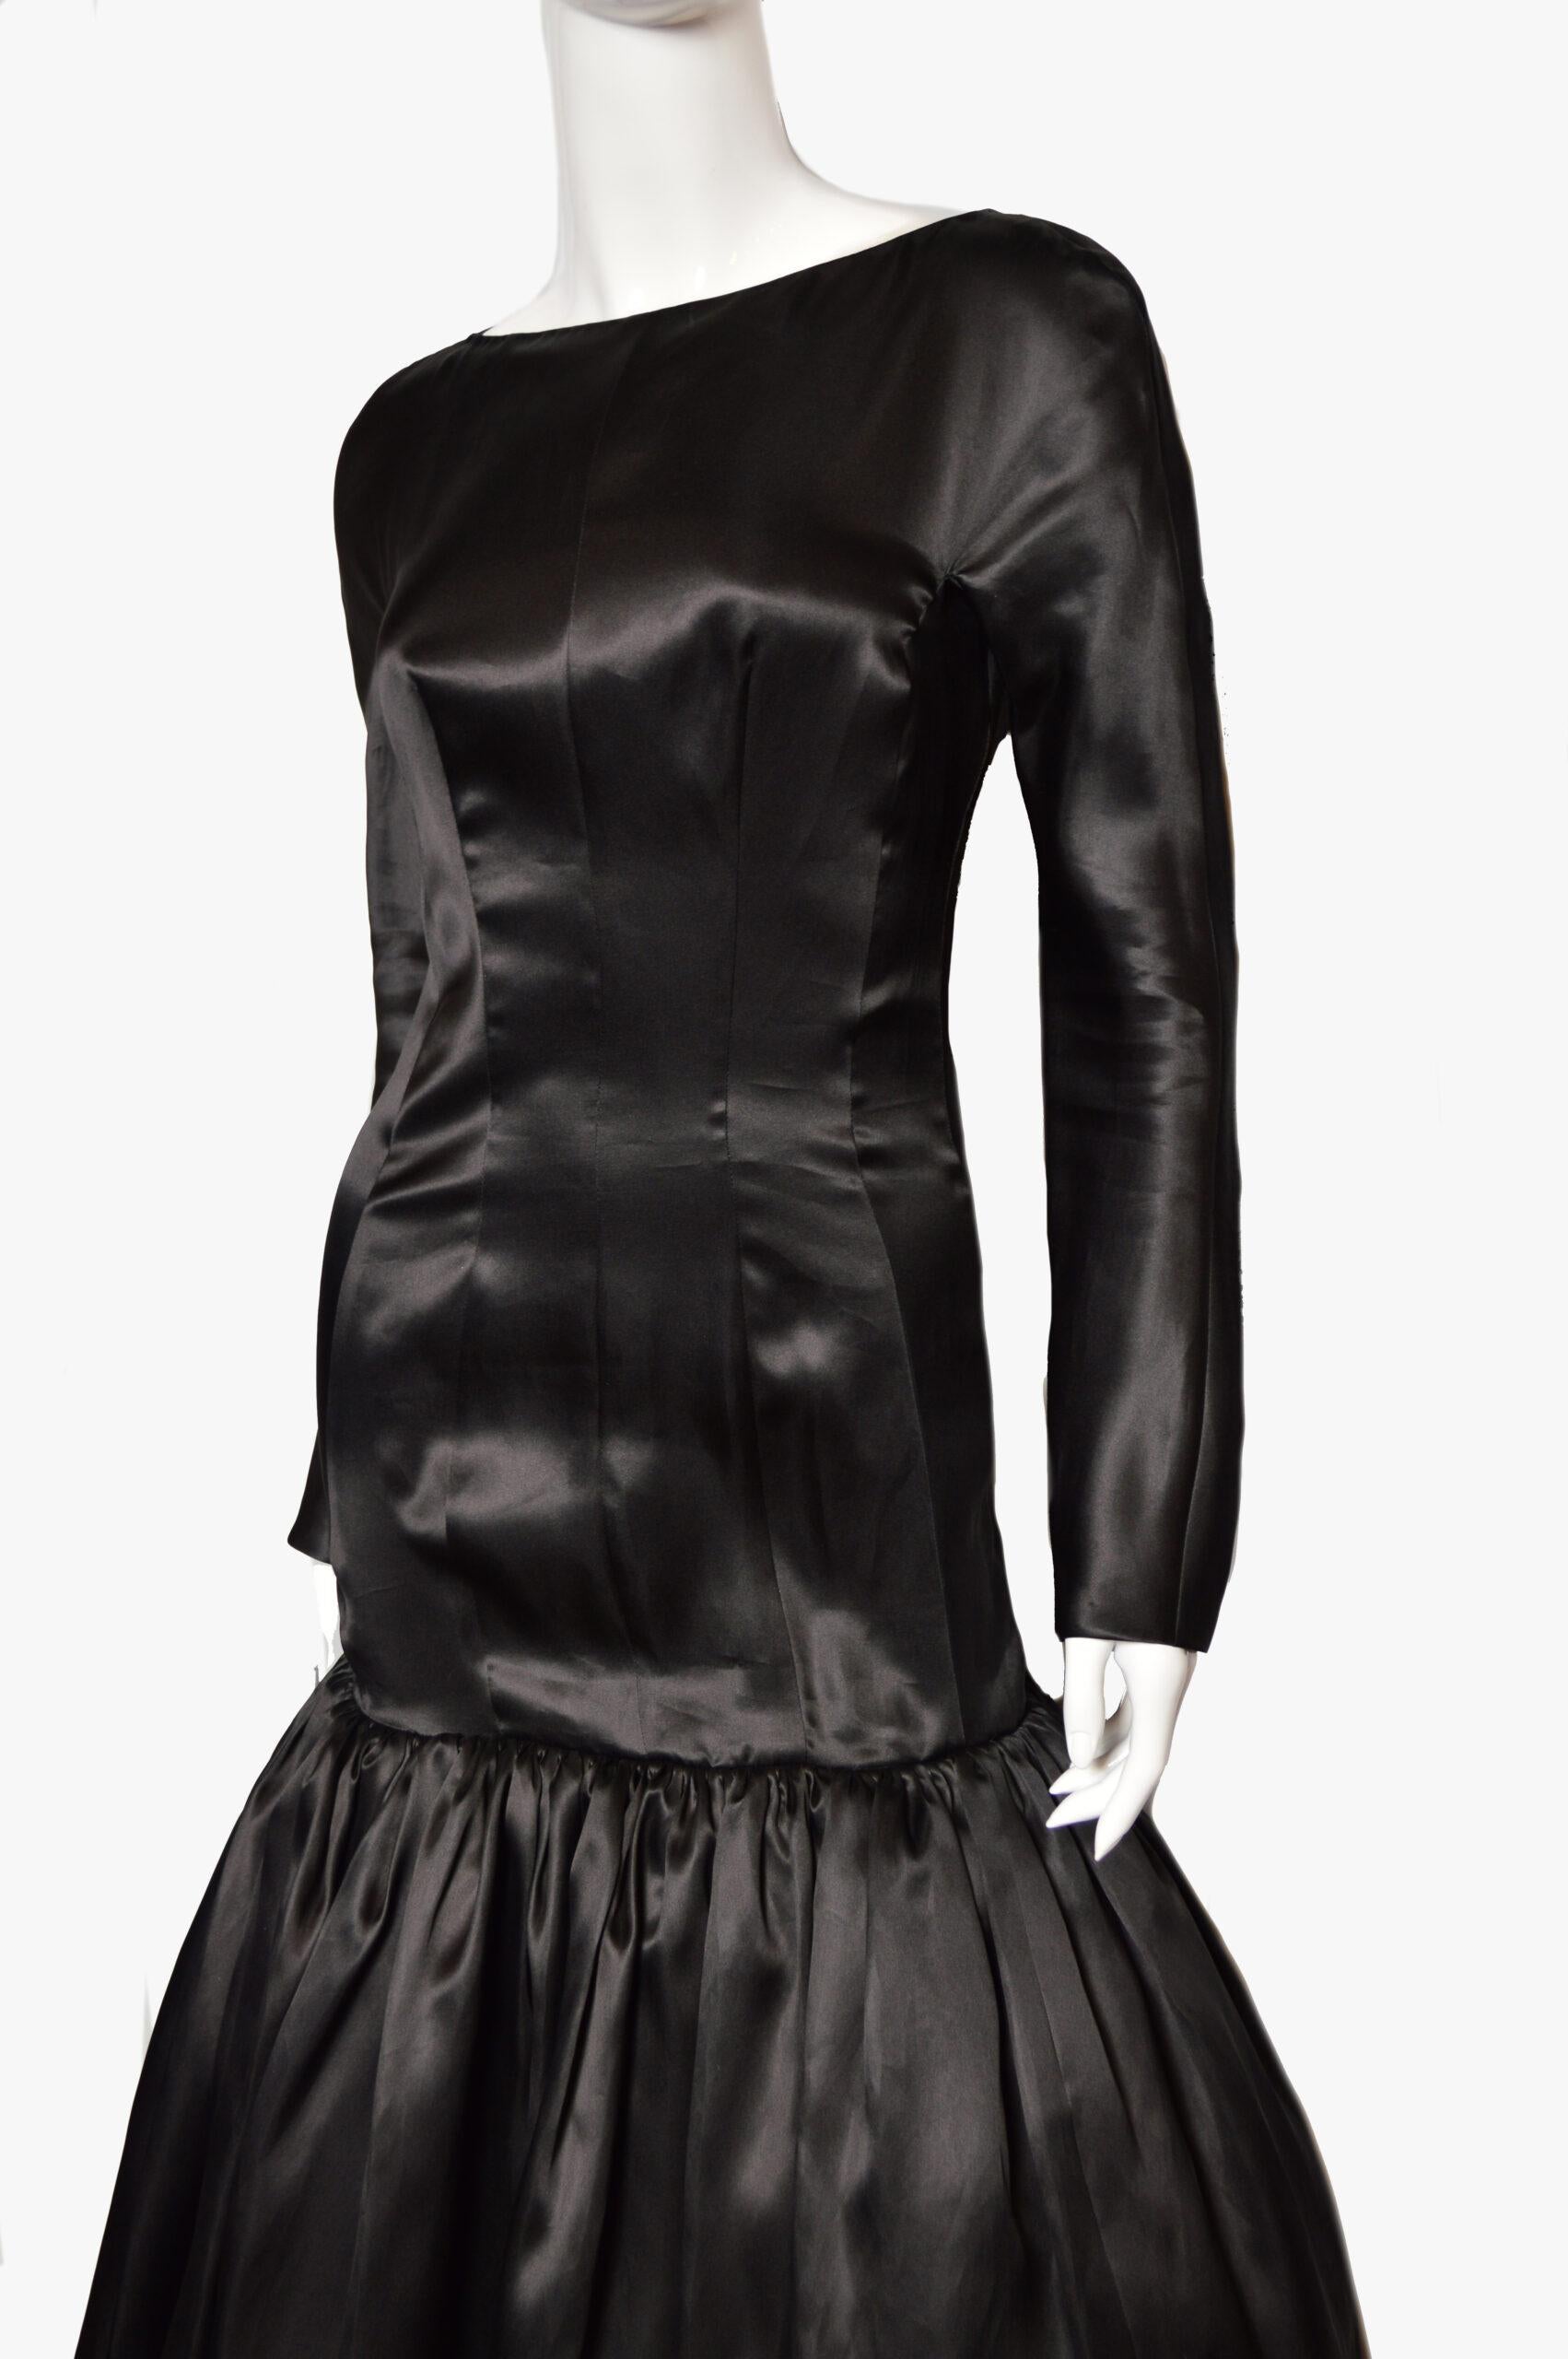 Fantastic Mila Schon couture evening dress. Figure silhouette with a fluffy tutu.

Additional information:
Fabric: 100% SE
Size: XS, 38
Waist: 62 cm / 24.4″
Hips: 82 cm / 32.2″
Chest: 70 cm / 27.5″
Shoulders: 45 cm / 17.7″
Length: 145 cm/